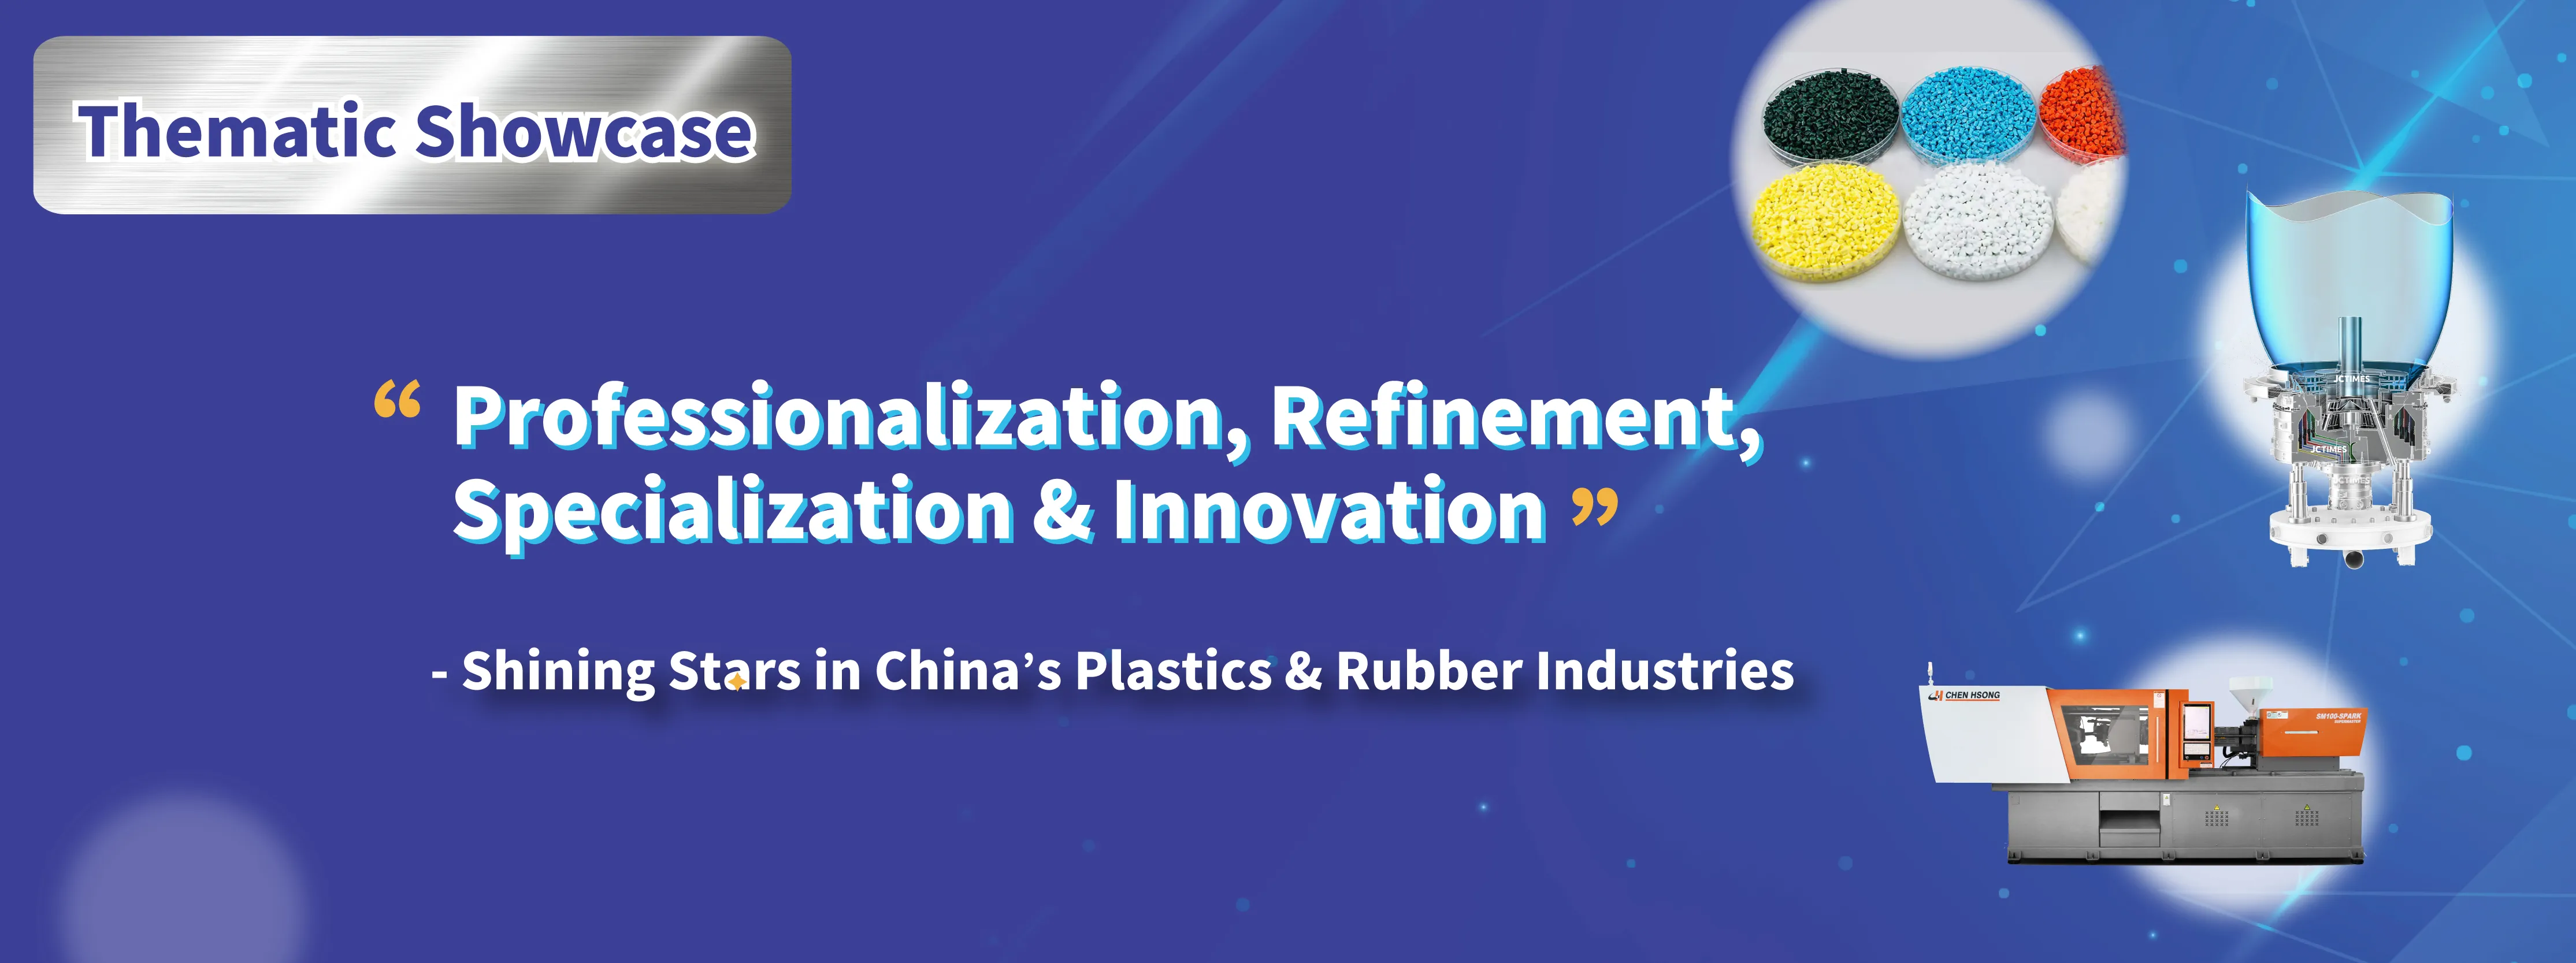 Professionalization, Refinement, Specialization & Innovation - Shining Stars in Plastics & Rubber Industries